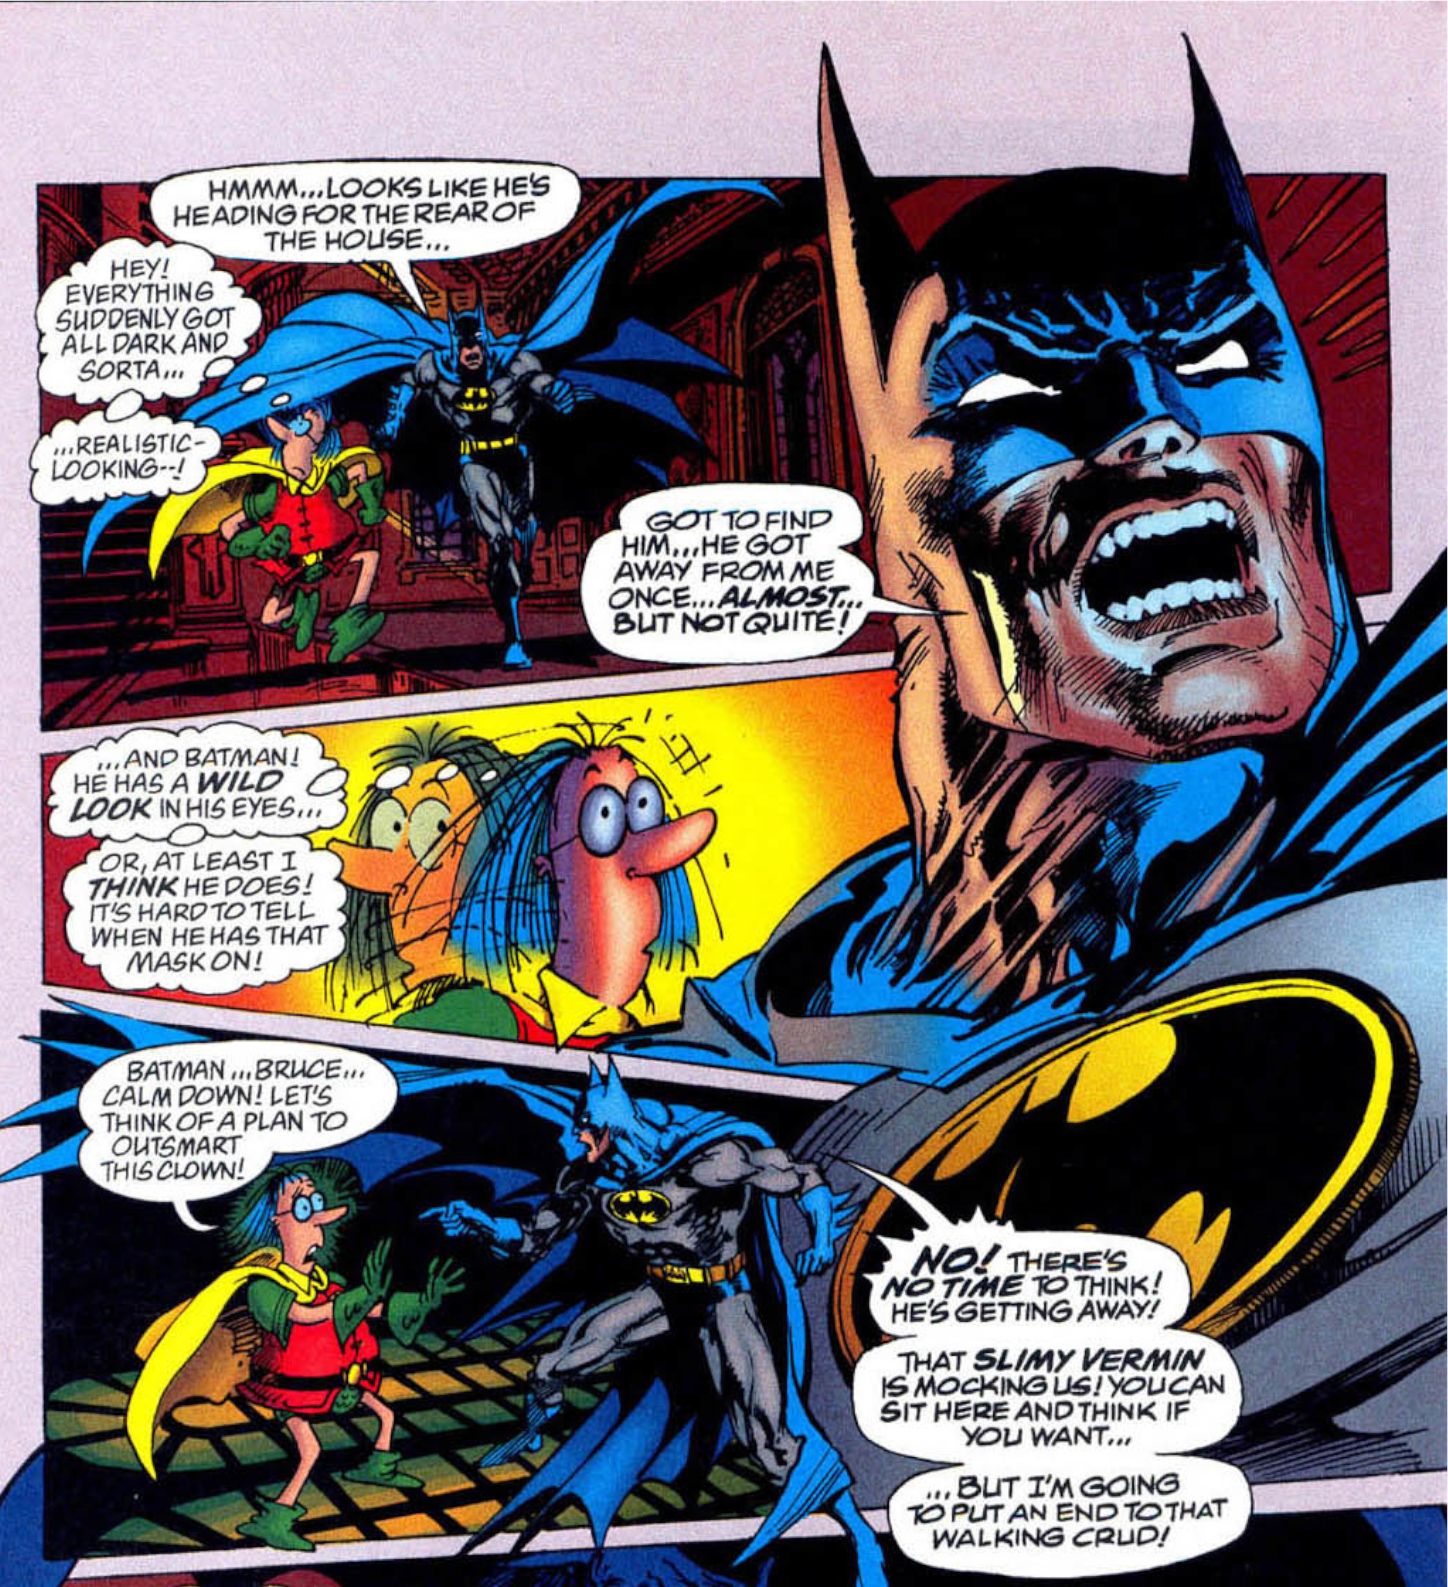 Fanboy #5 - Neal Adams' Batman